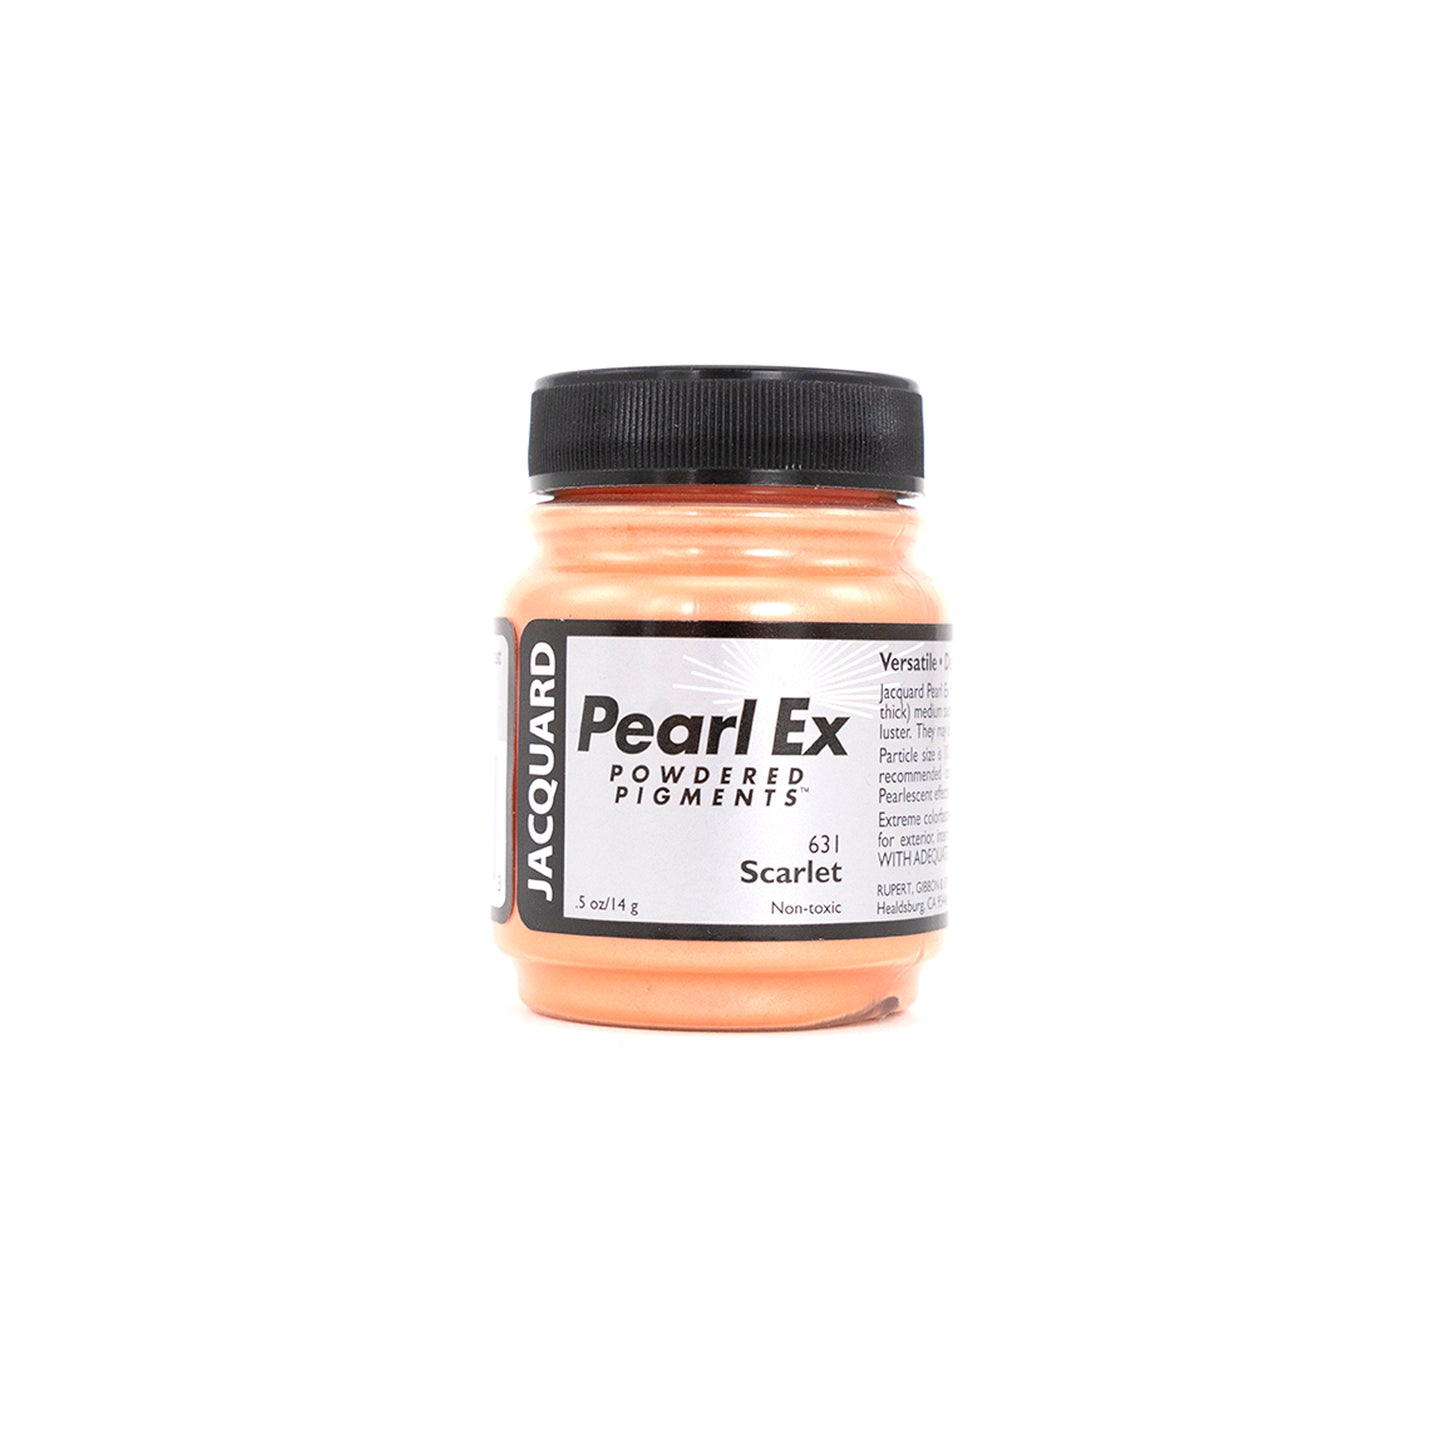 Jacquard PearlEx Powdered Pigments - 0.75 oz jars - Scarlet by Jacquard - K. A. Artist Shop